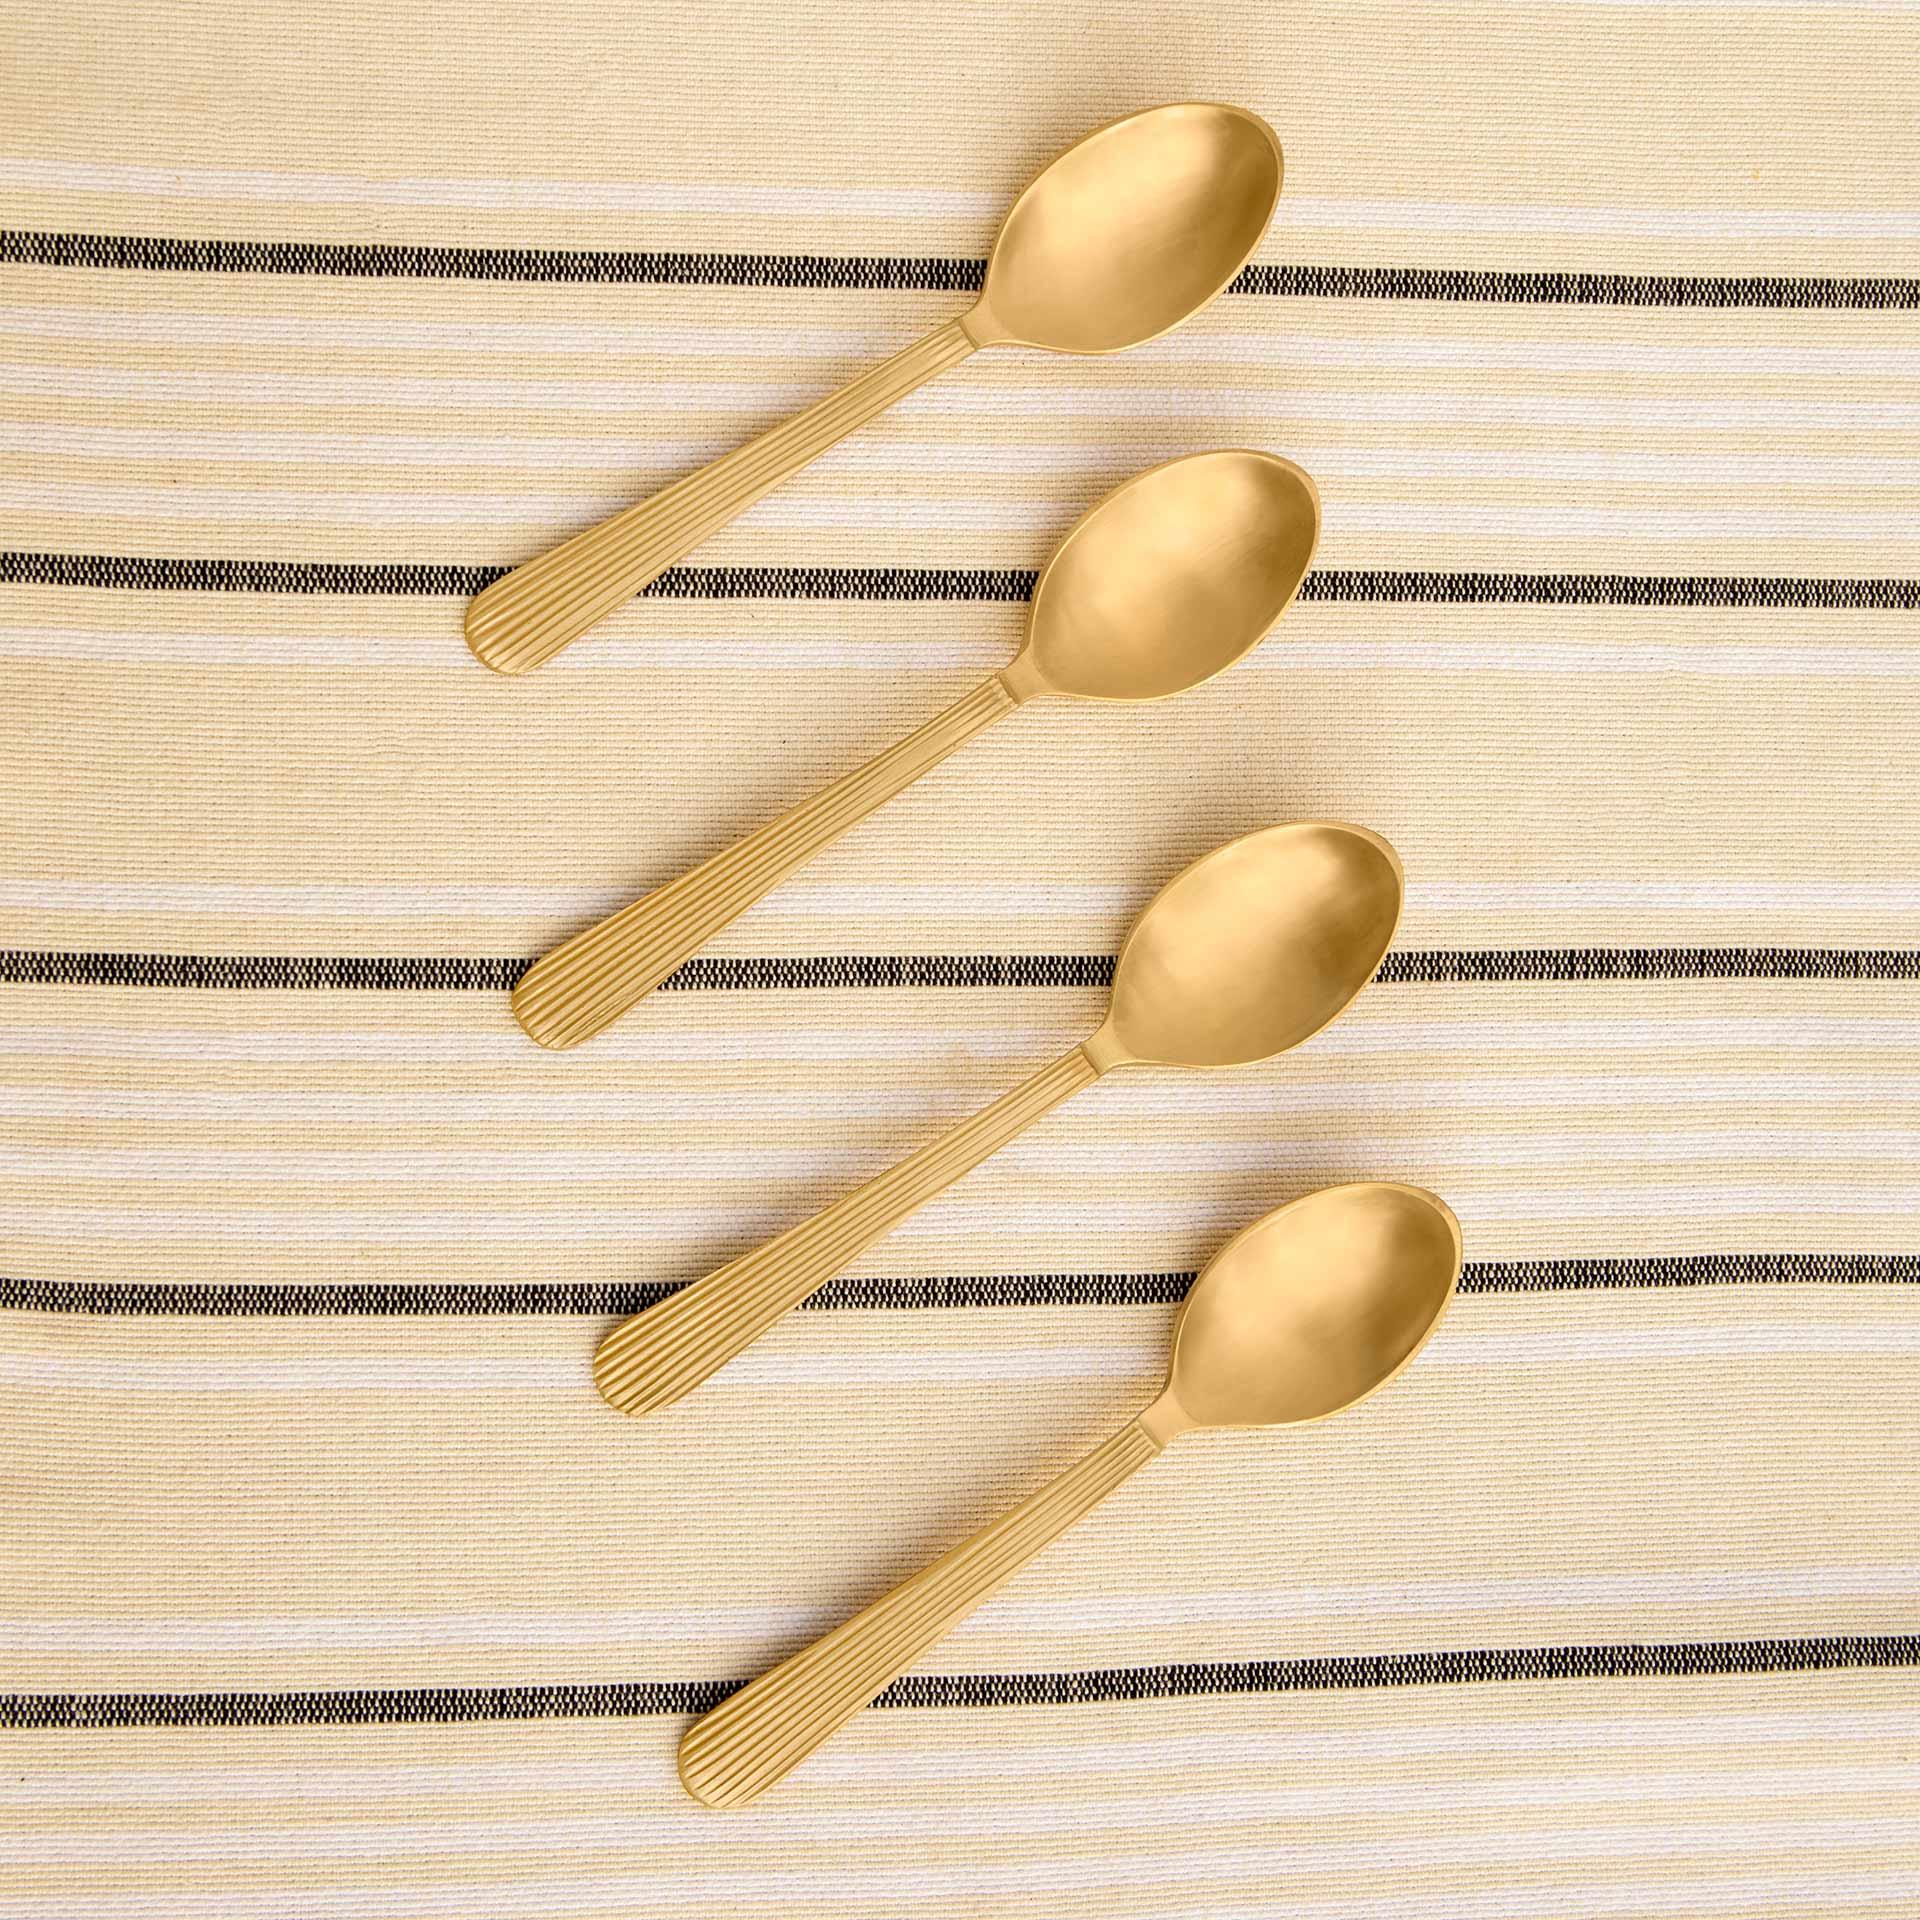 Celestial Brass Table Spoon Set of 4